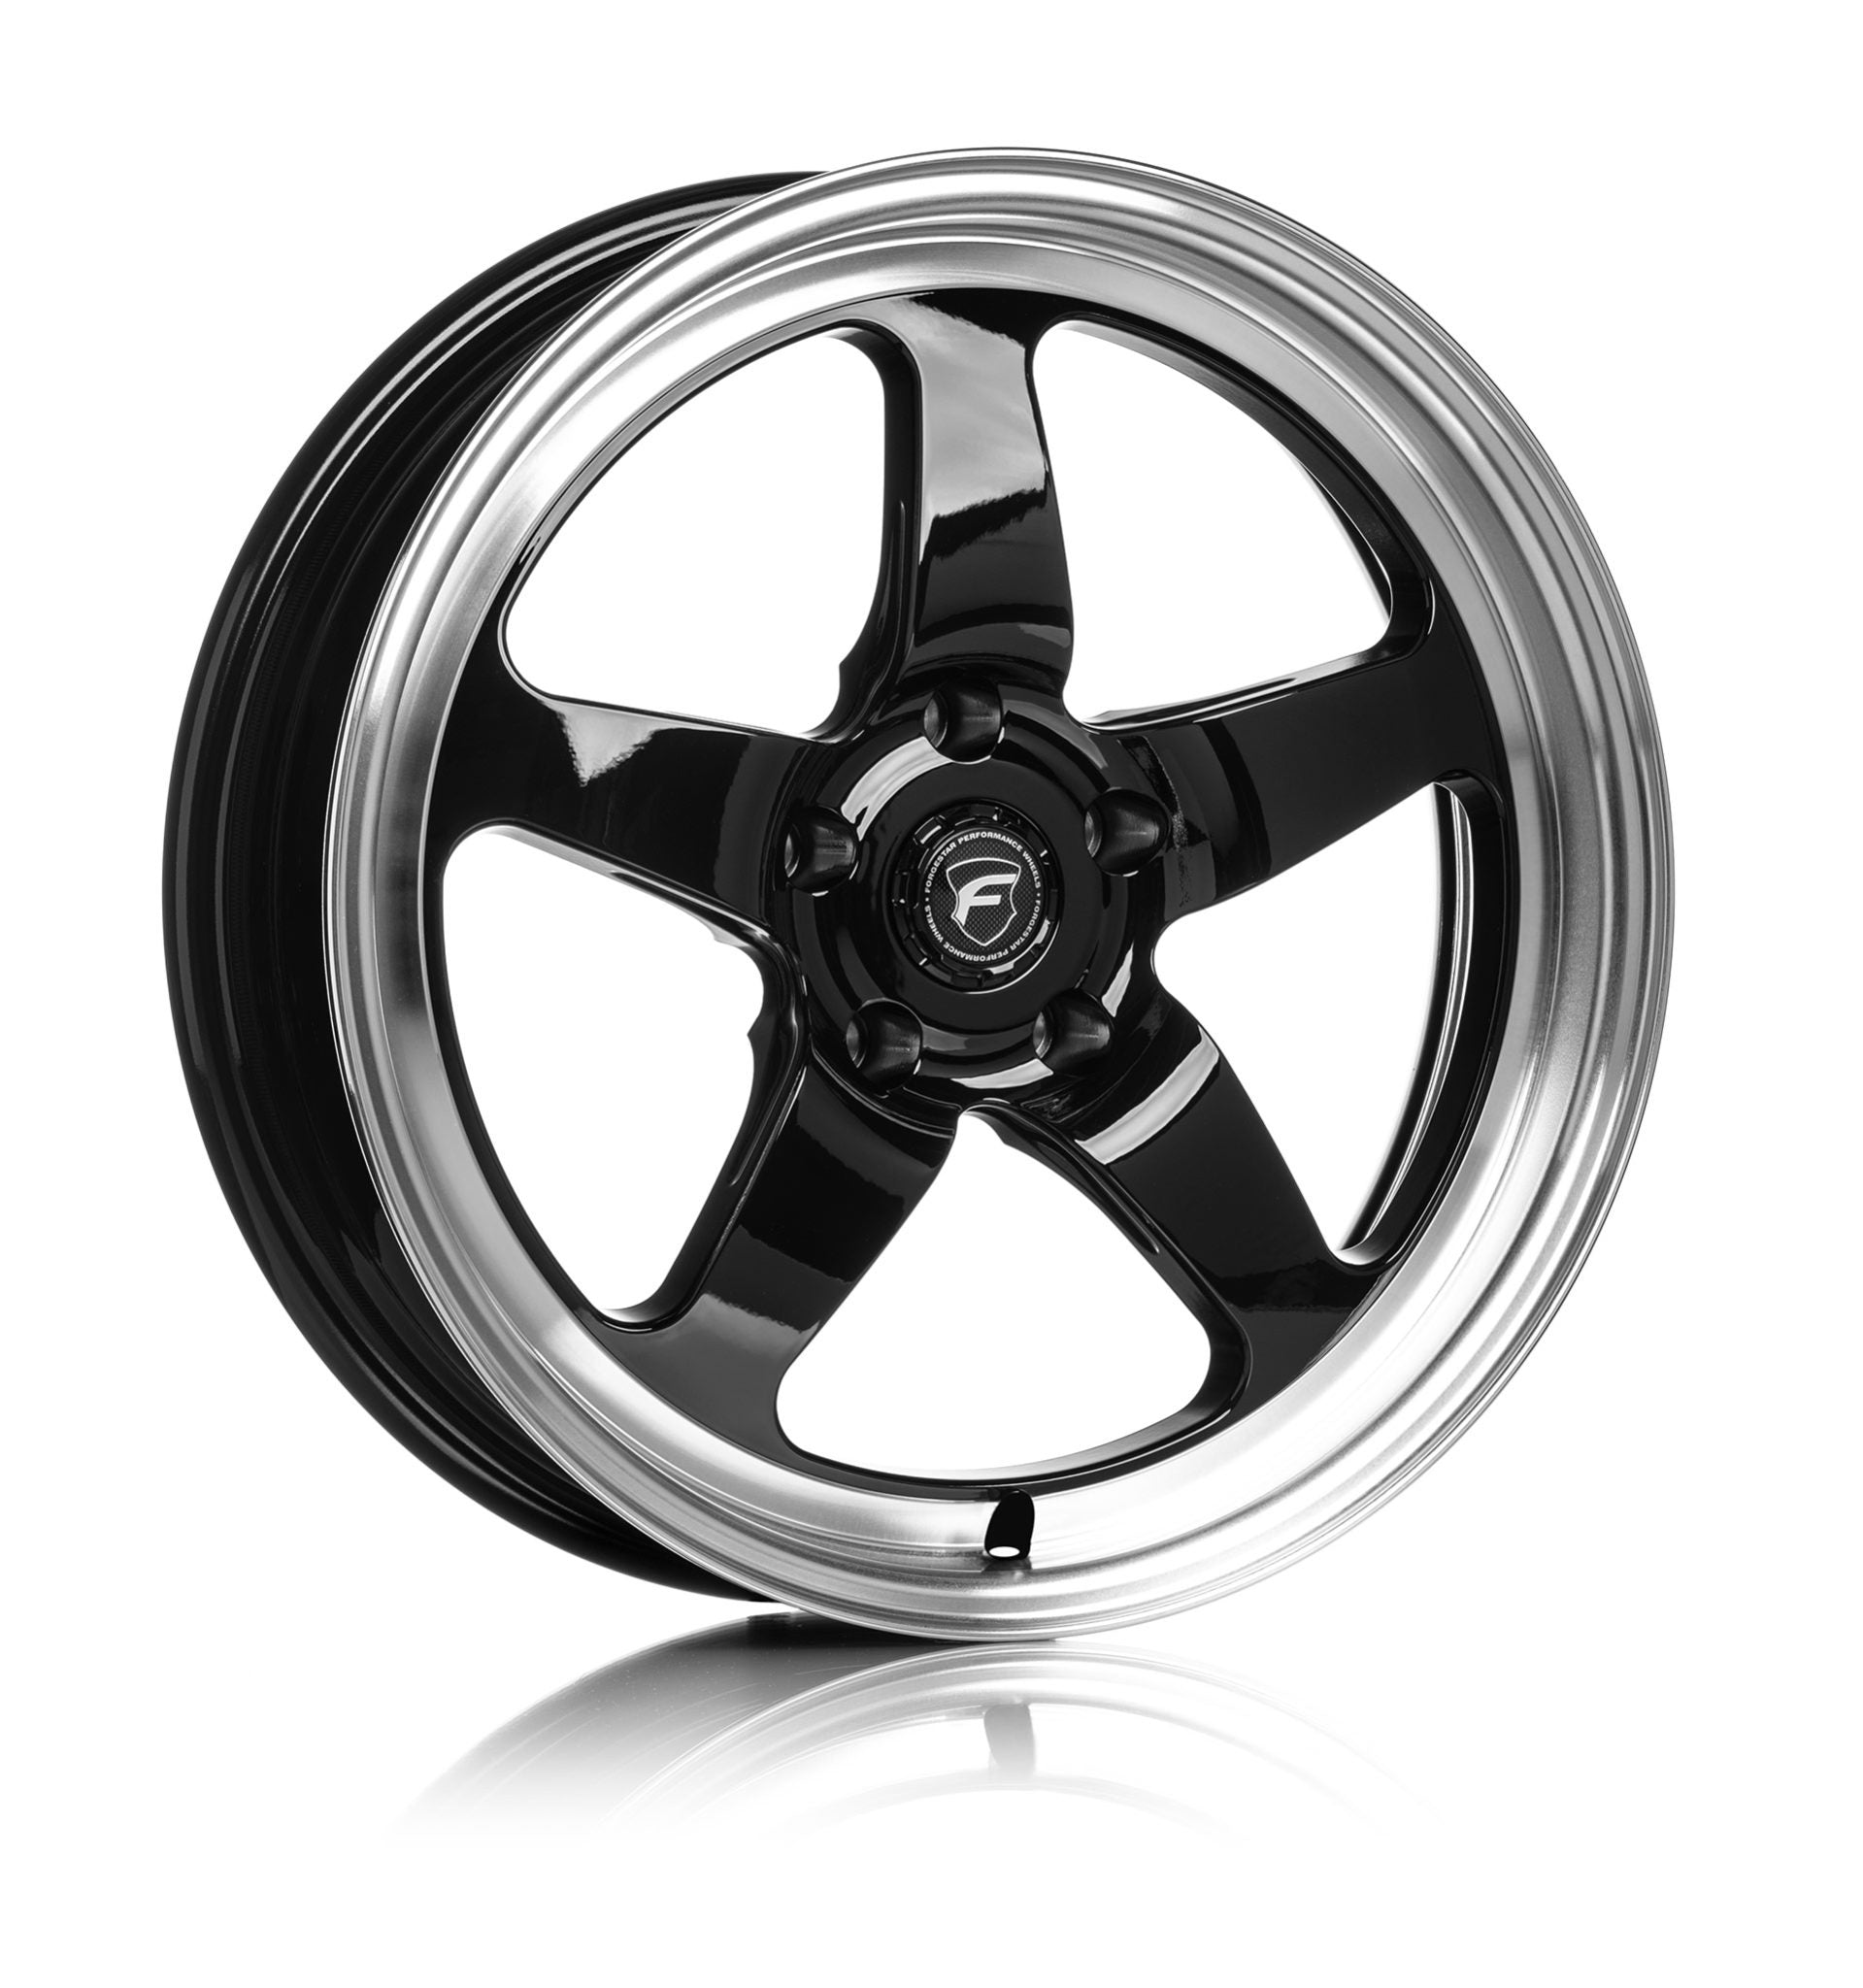 Forgestar D5 Drag Racing Wheels - Gloss Black w/Machined Lip - 18x10 - Sold Individually - Motorsports LA